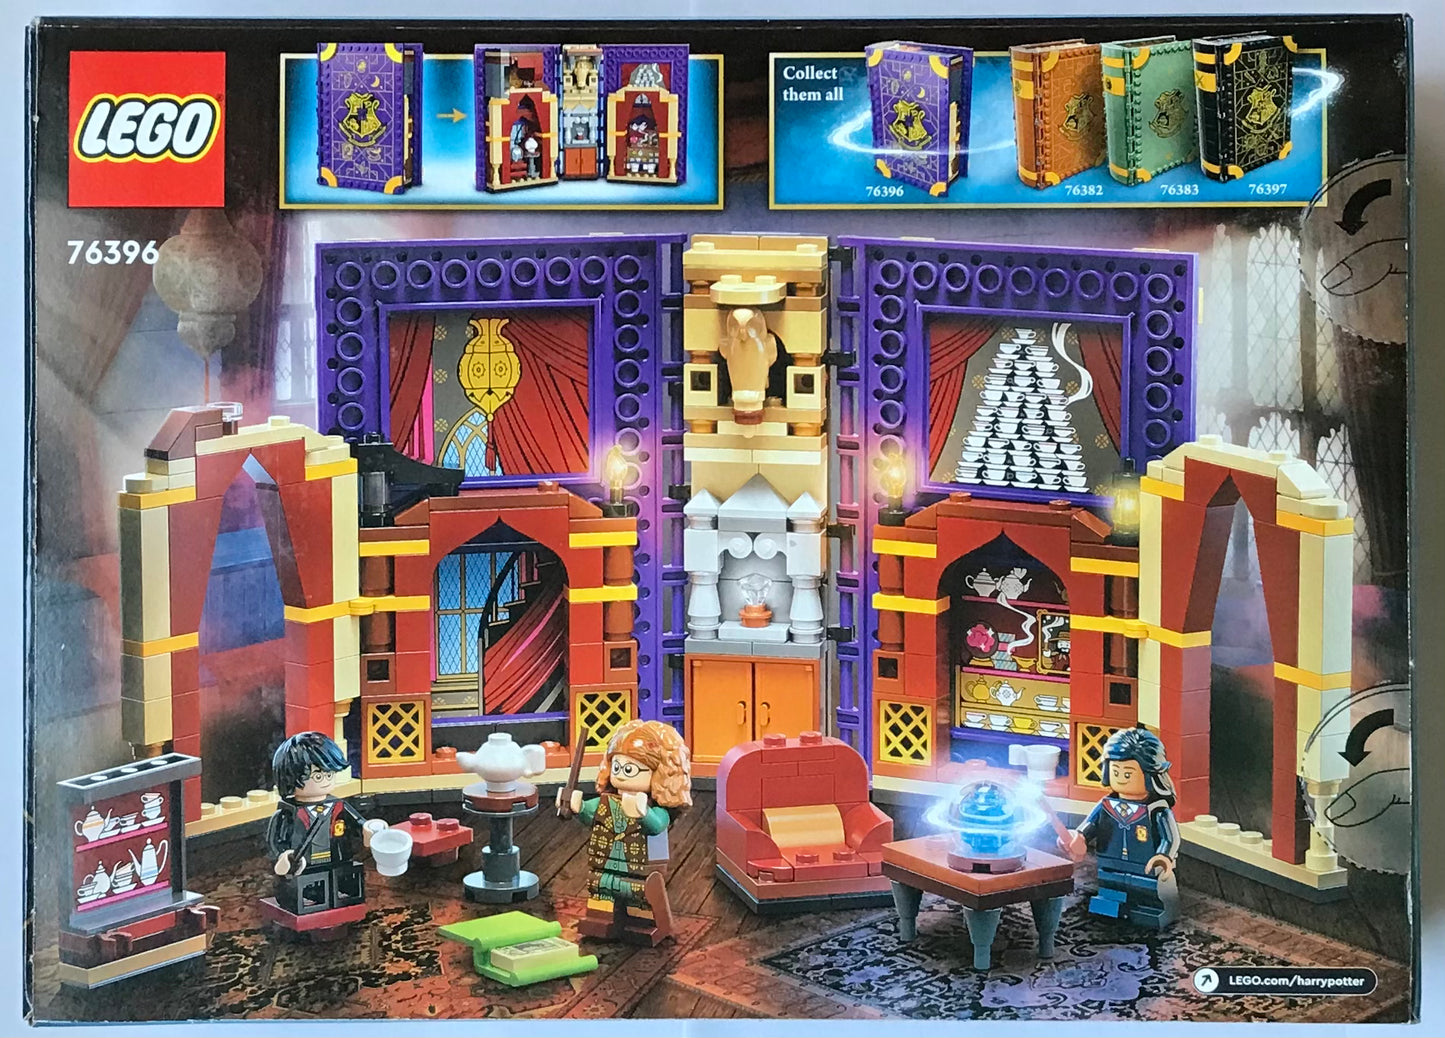 LEGO Harry Potter Hogwarts Moment: Divination Class Set 76396